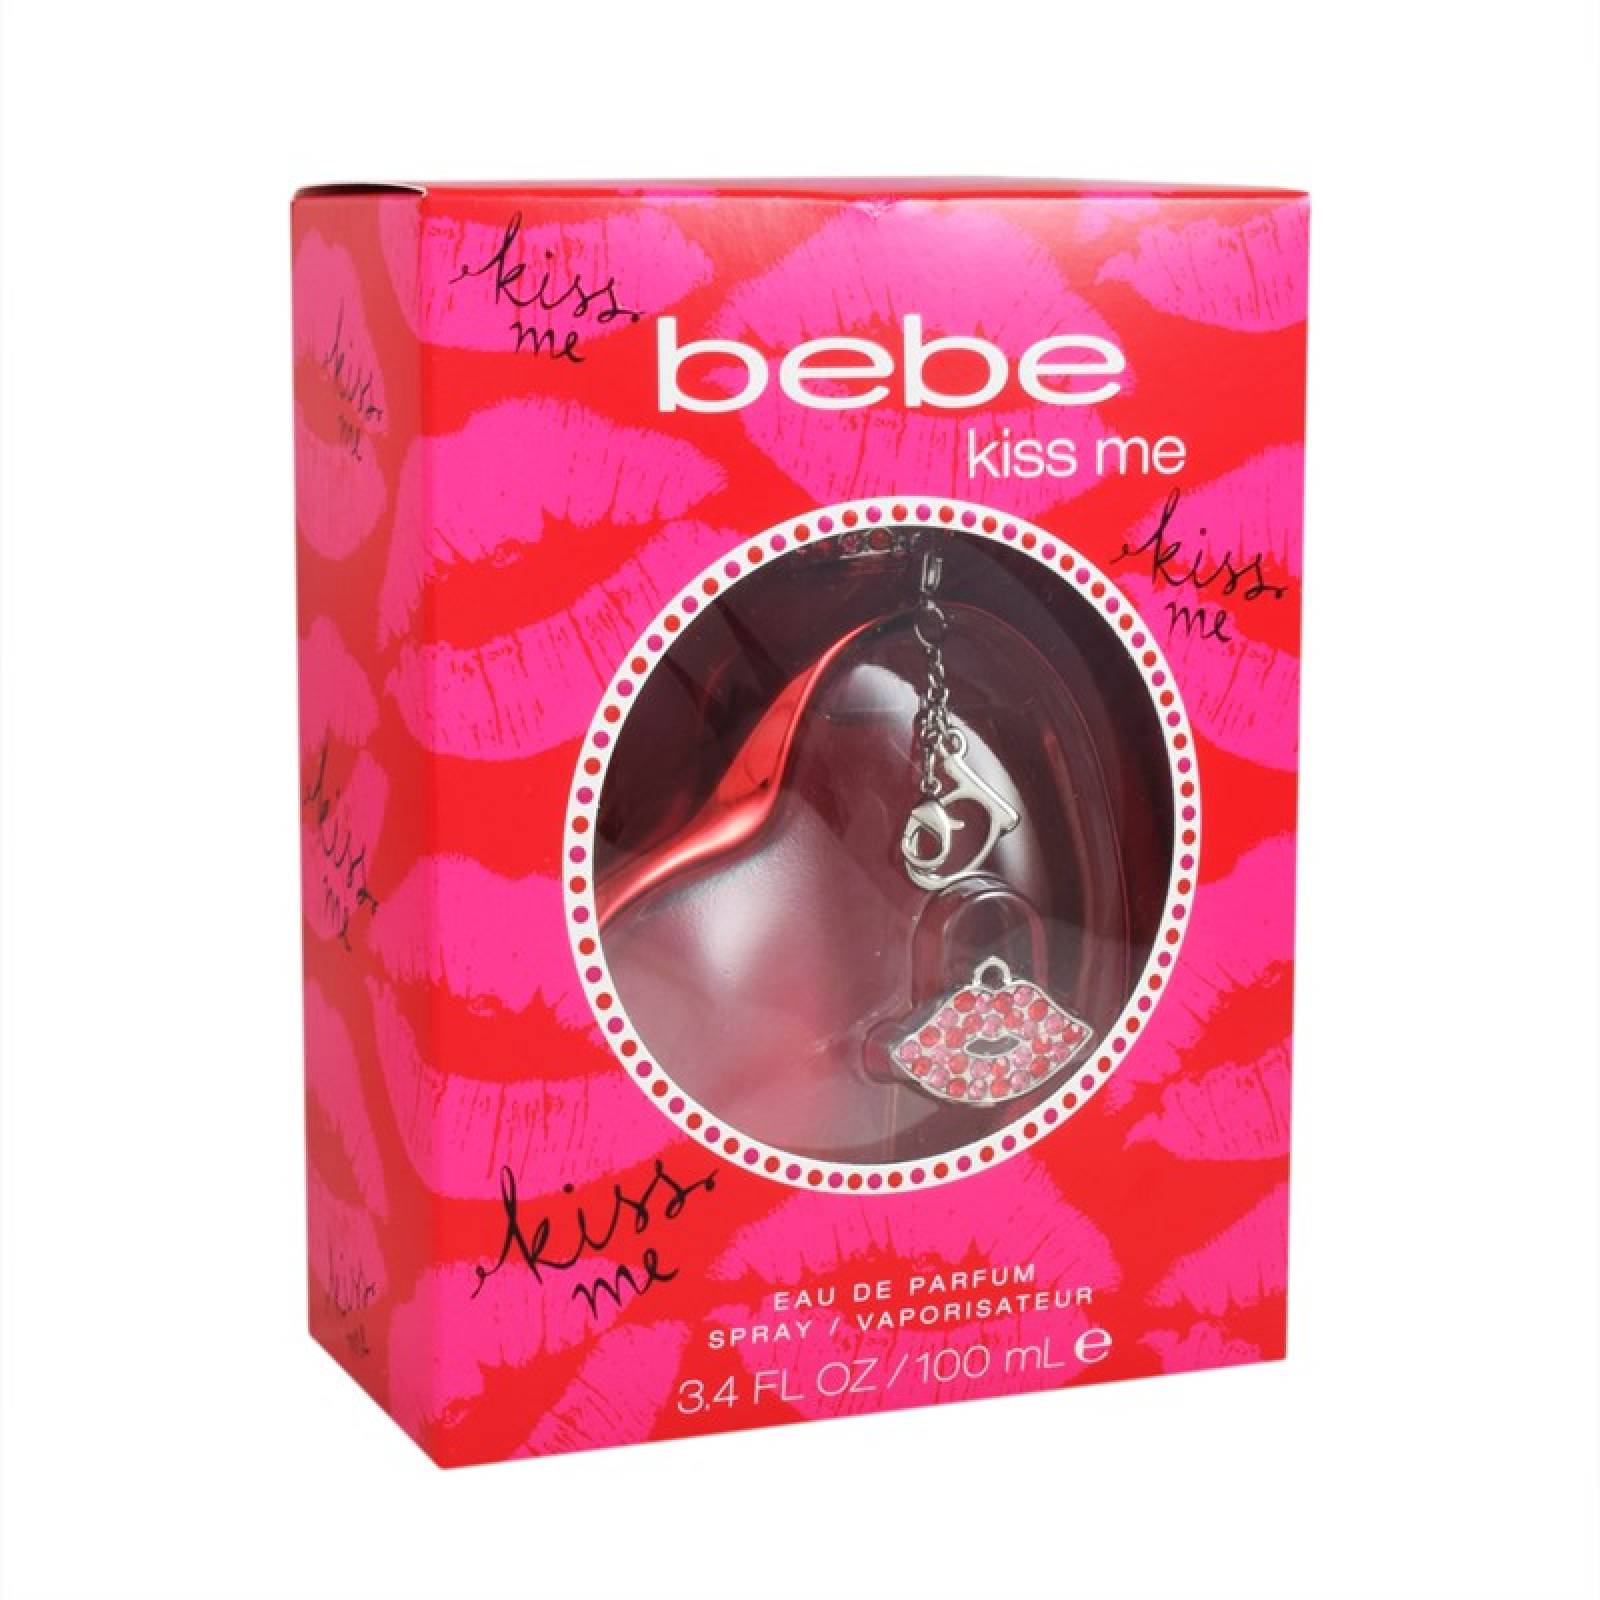 Bebe Kiss Me 100 ml Eau de Parfum Spray de Bebe Fragancia para Dama